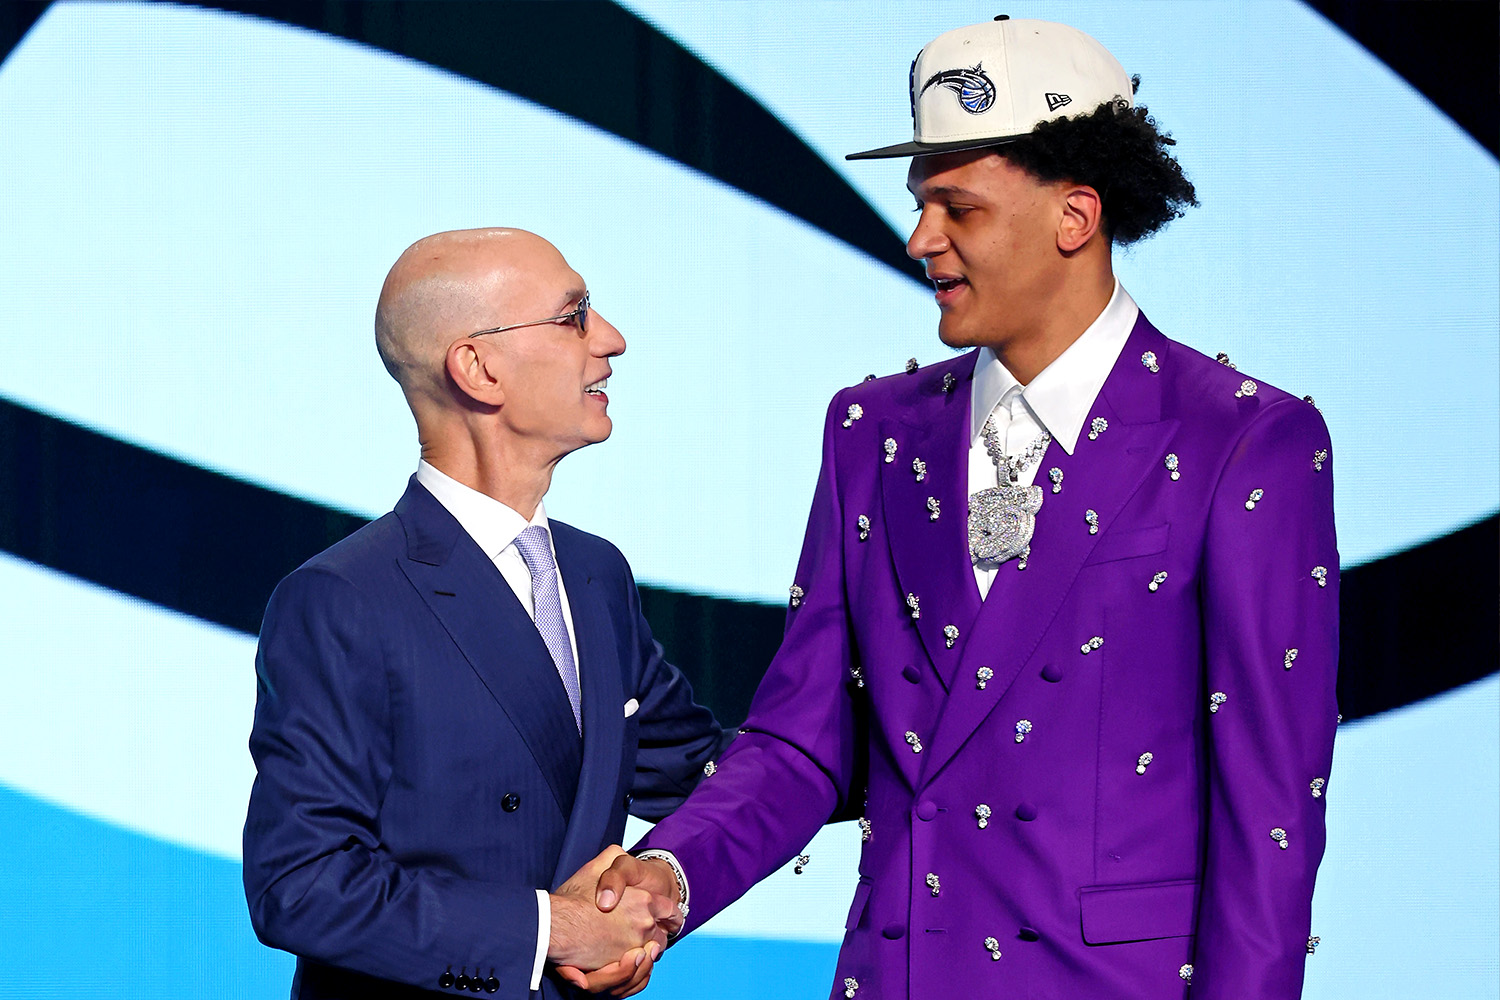 NBA Draft Prospects The Washington Wizards' Blueprint for a Turnaround